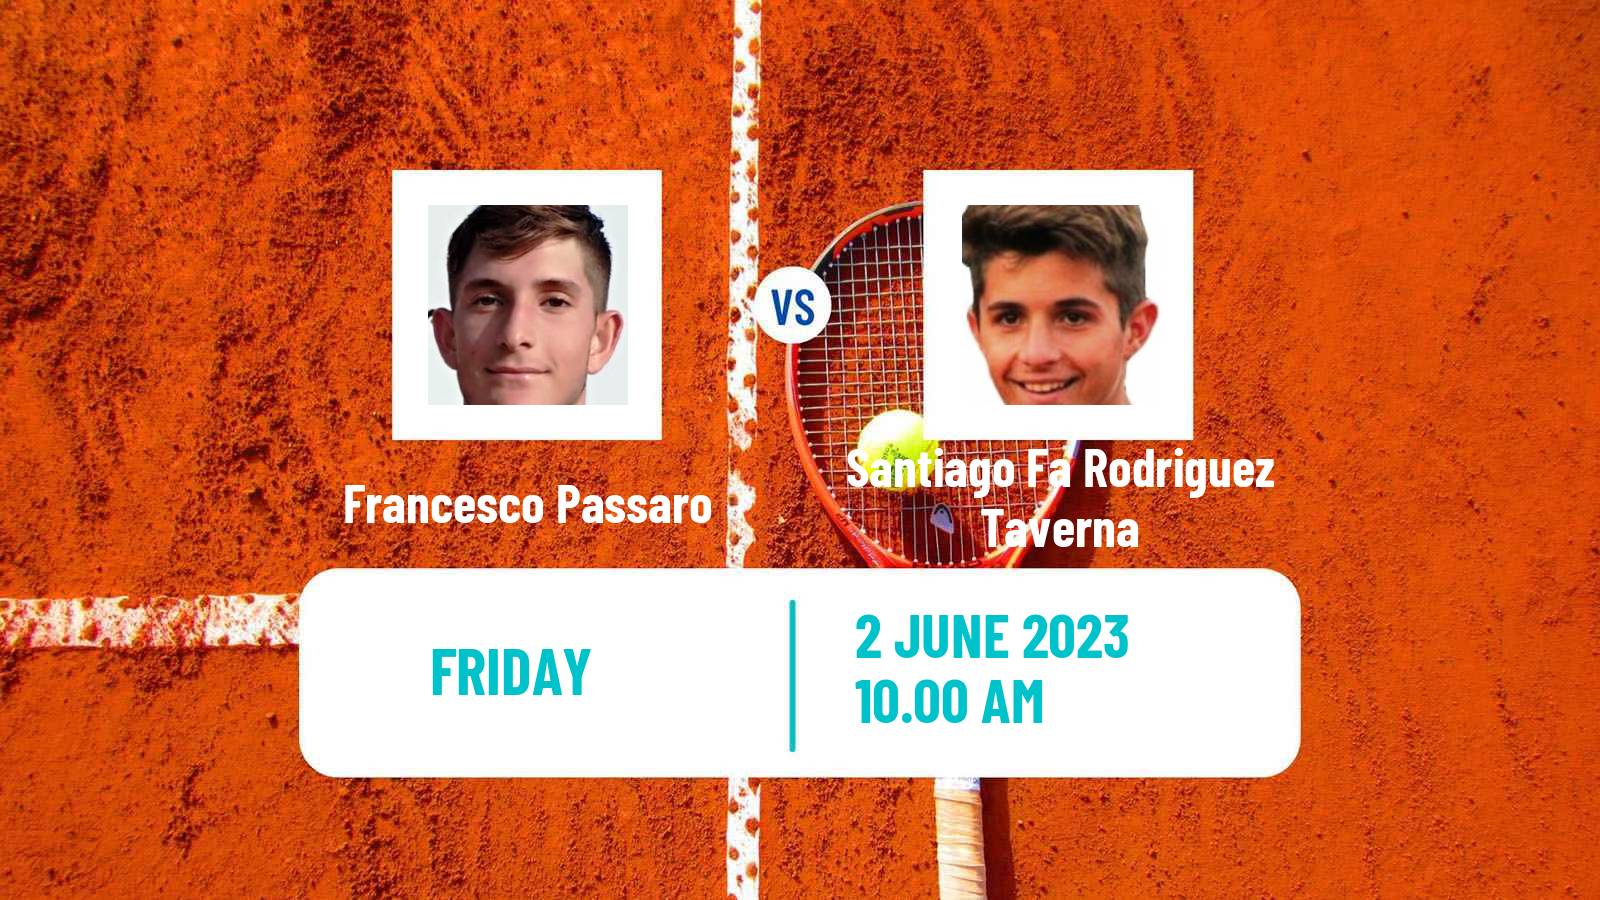 Tennis Vicenza Challenger Men Francesco Passaro - Santiago Fa Rodriguez Taverna